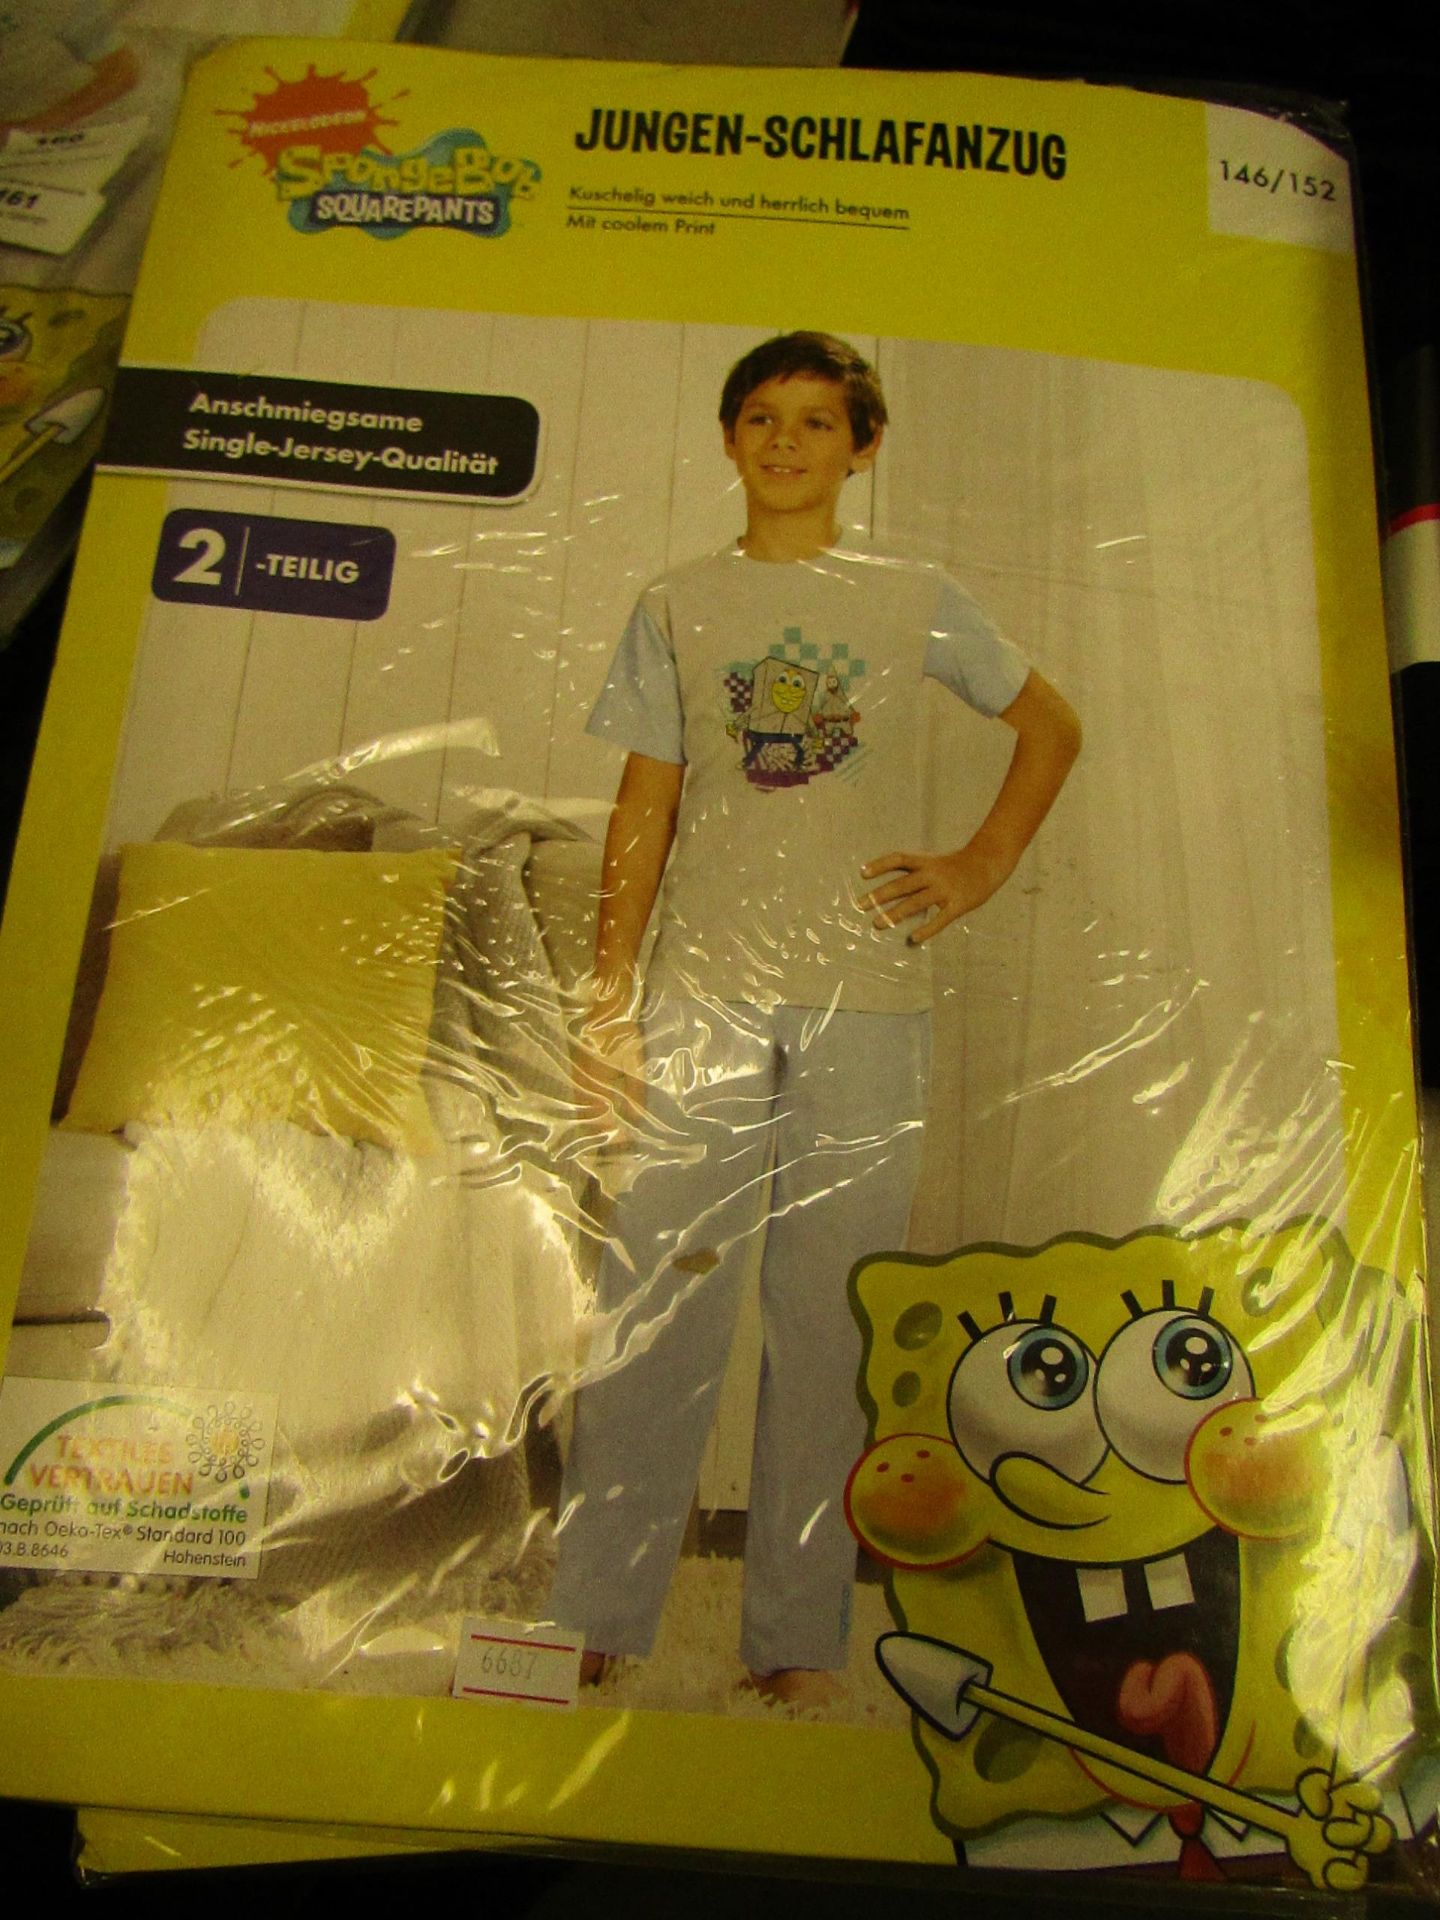 1 x Spongebob Squarepants PJ's size 146/152 new & packaged